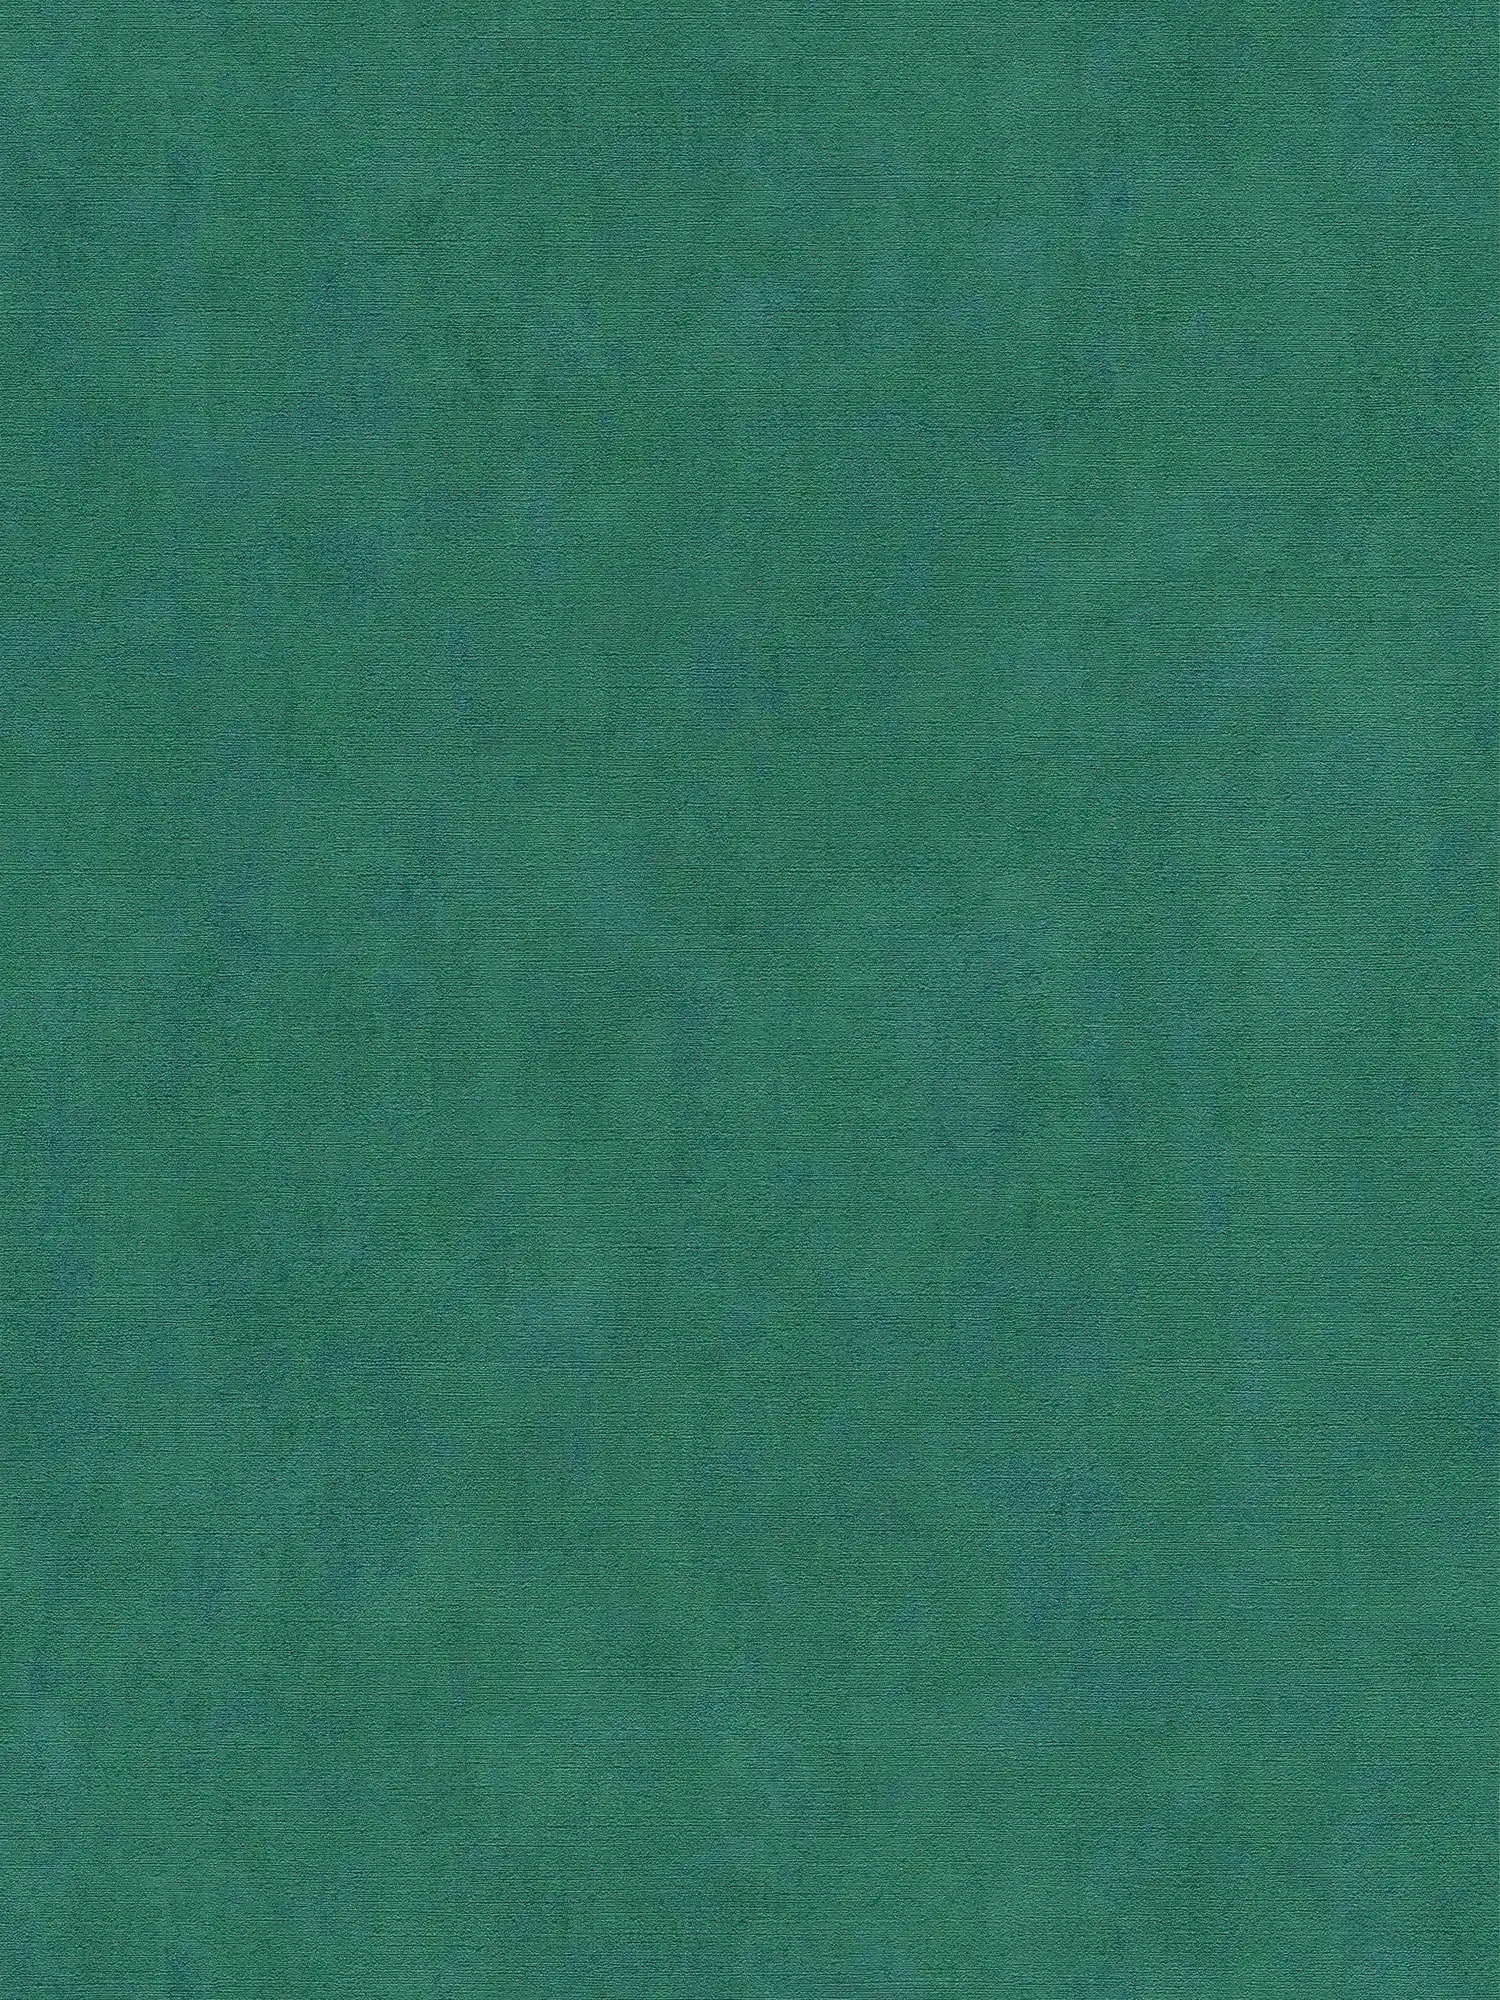 Carta da parati verde smeraldo screziata con effetto metallico blu - blu, verde
